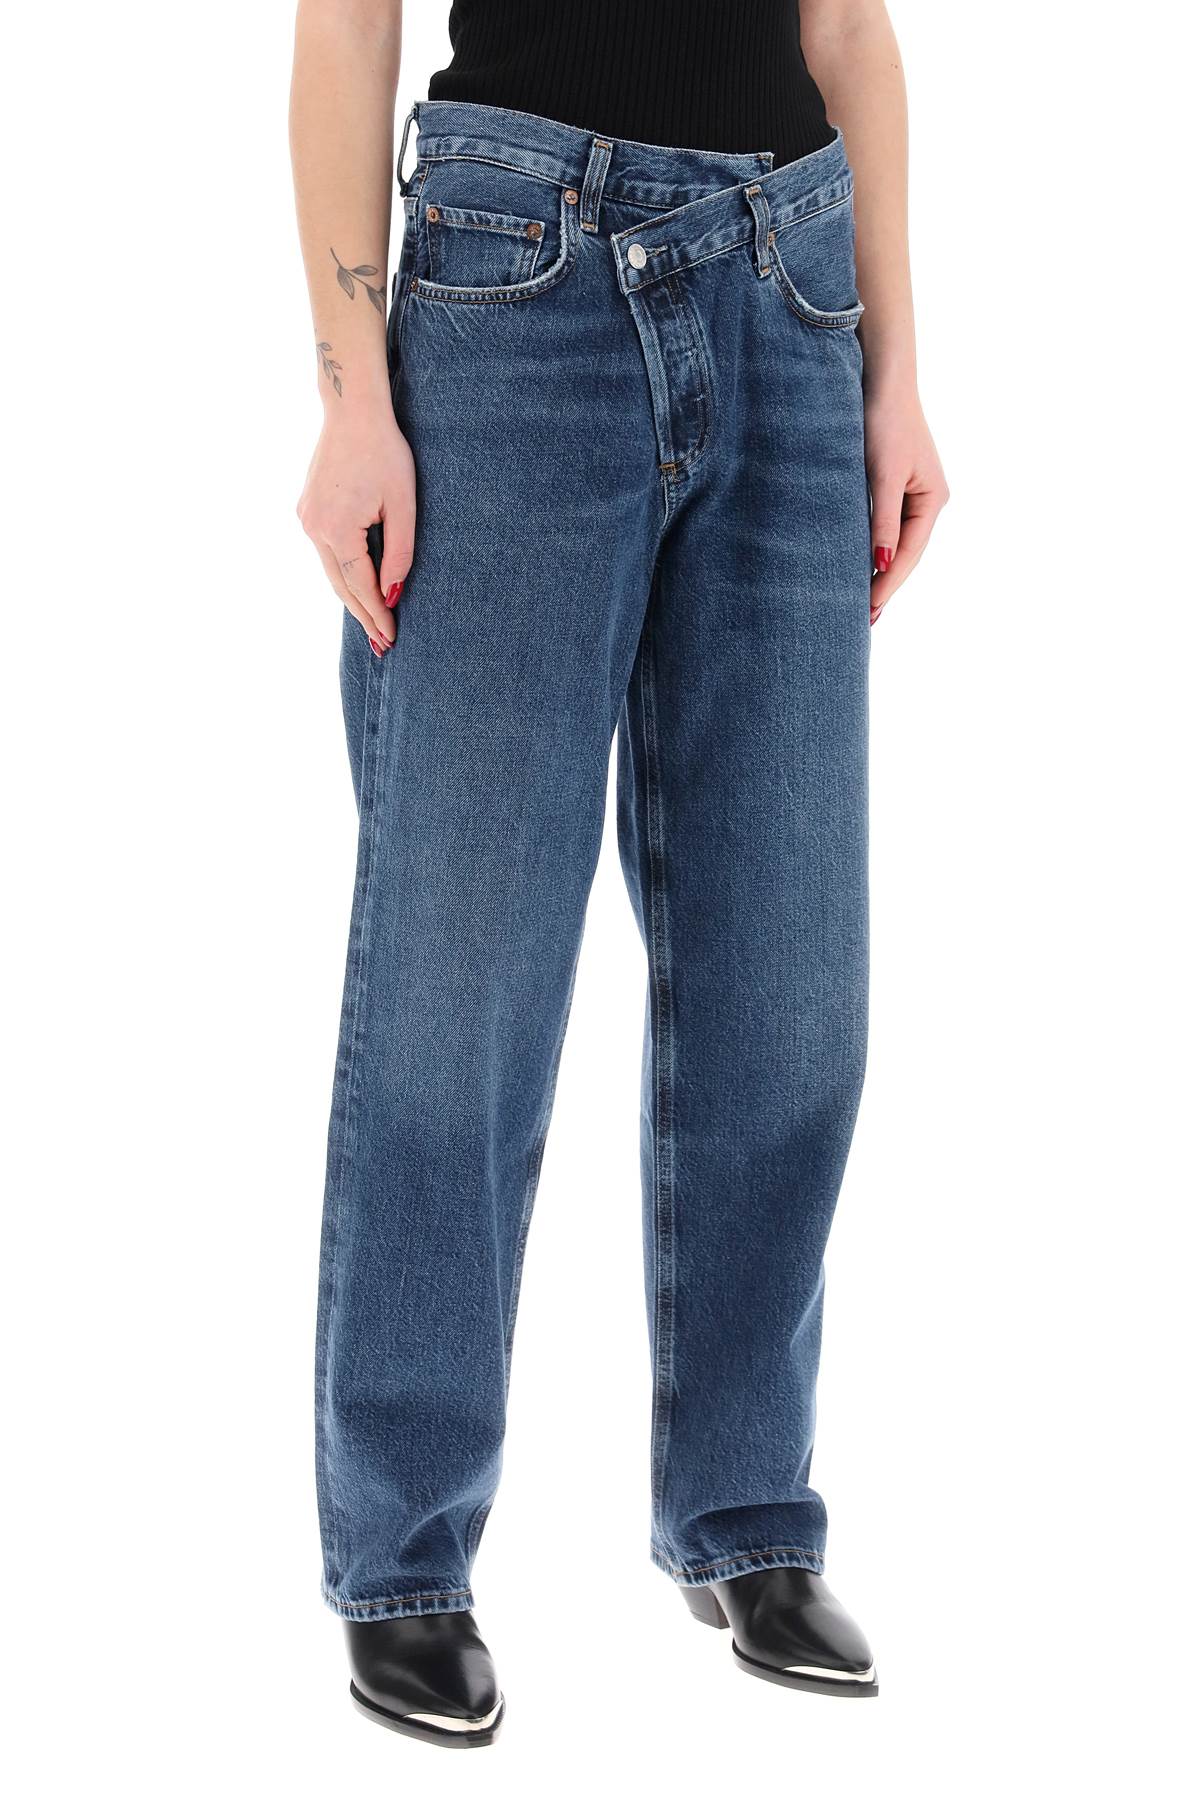 Agolde criss cross jeans-1